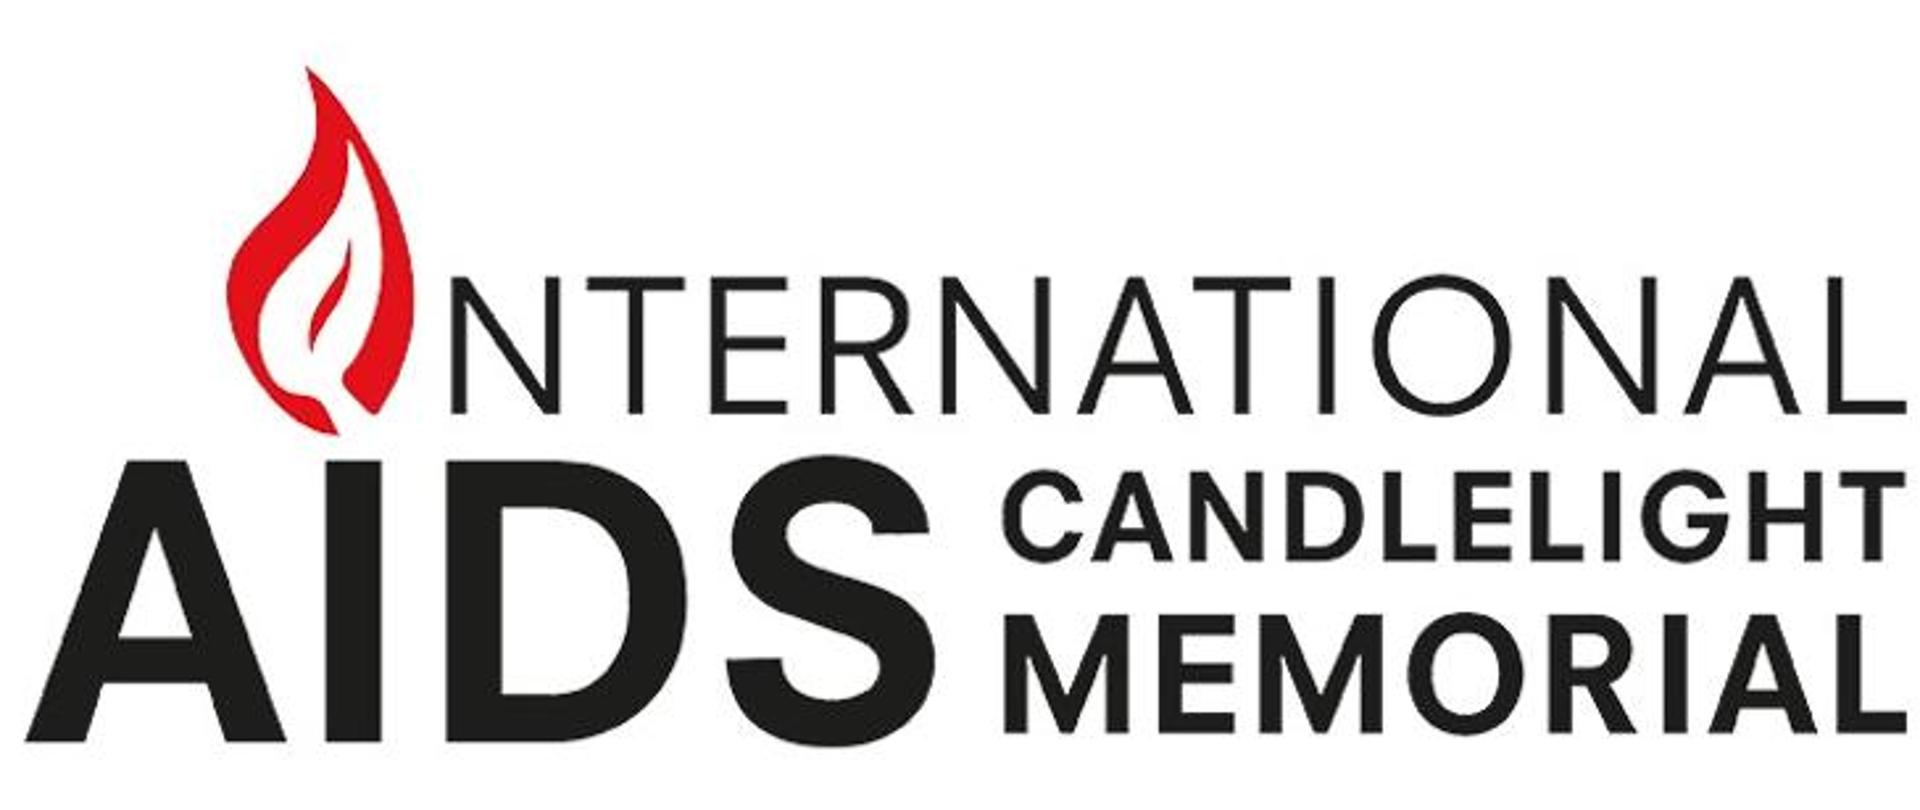 Napis: International AIDS Candlelight Memorial